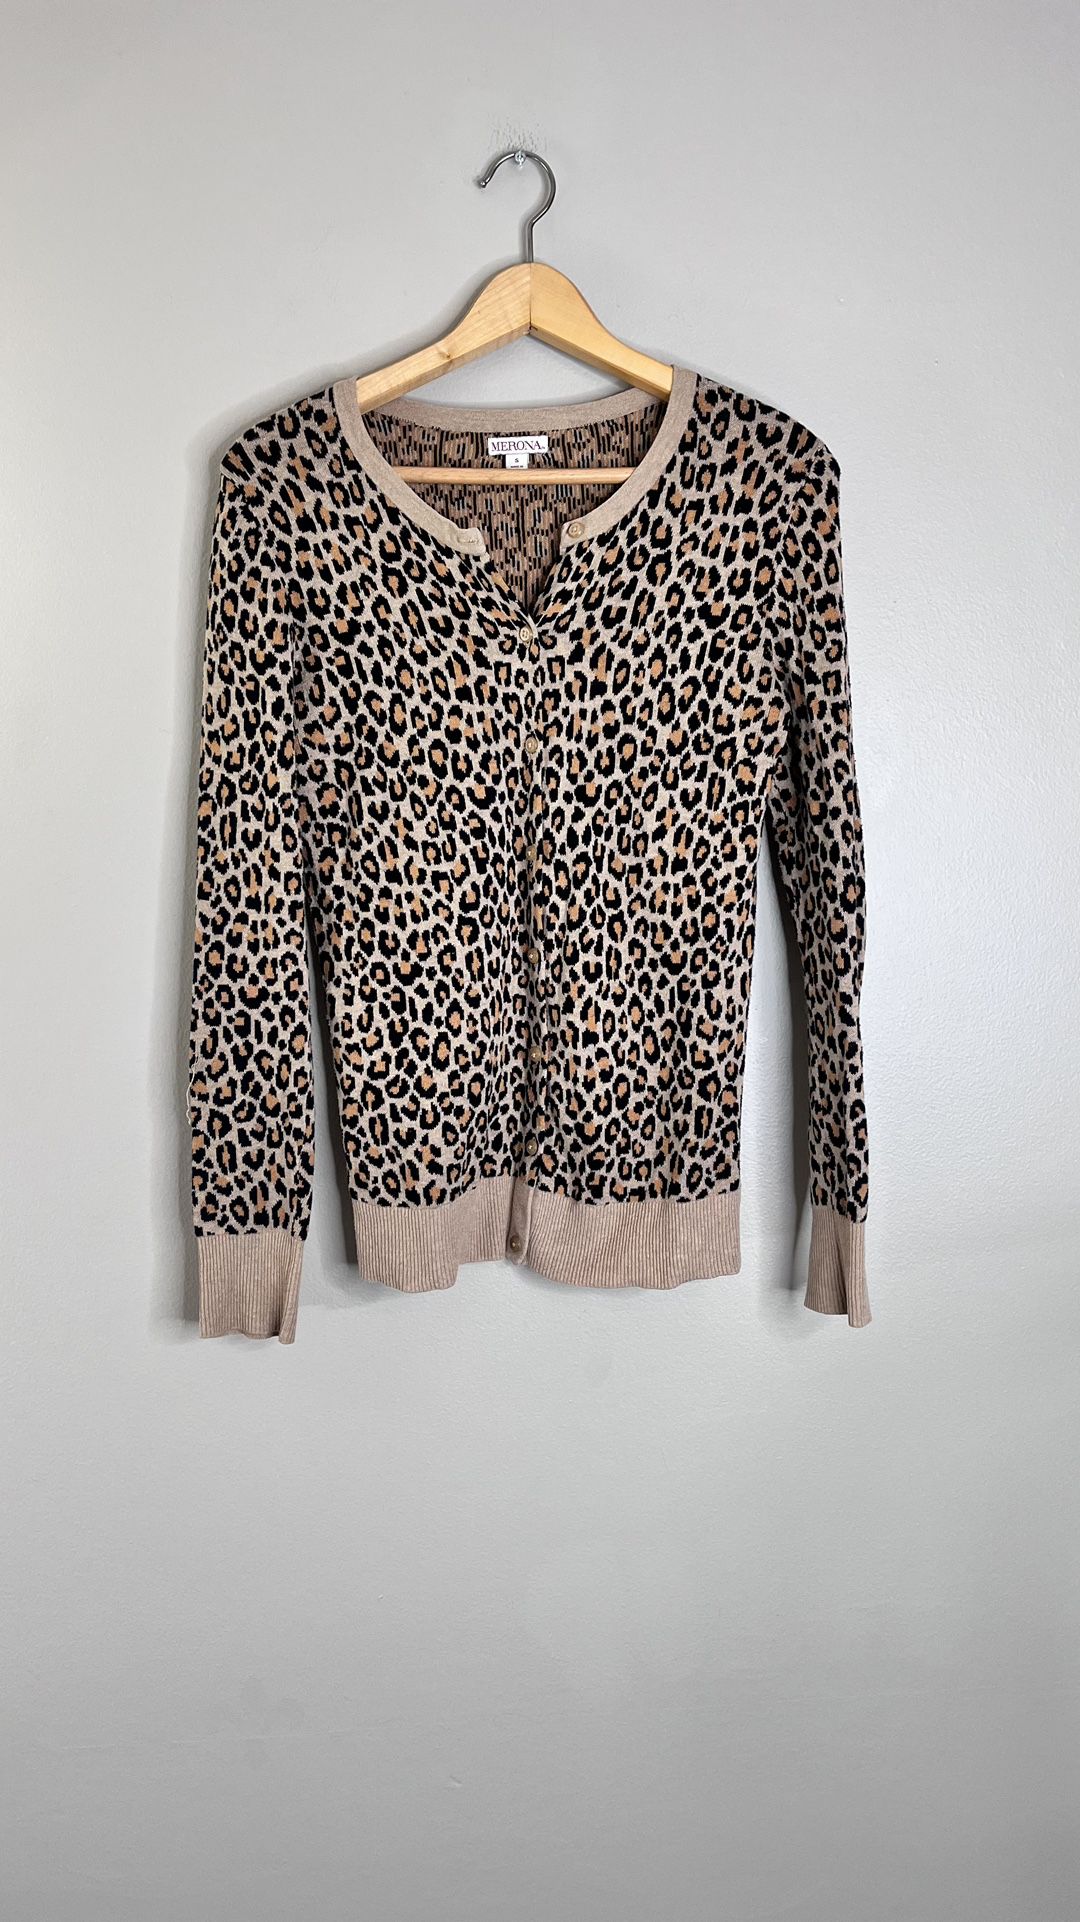 Merona Small Black Tan Orange Cheetah Print Button Down Knit Cardigan Sweater